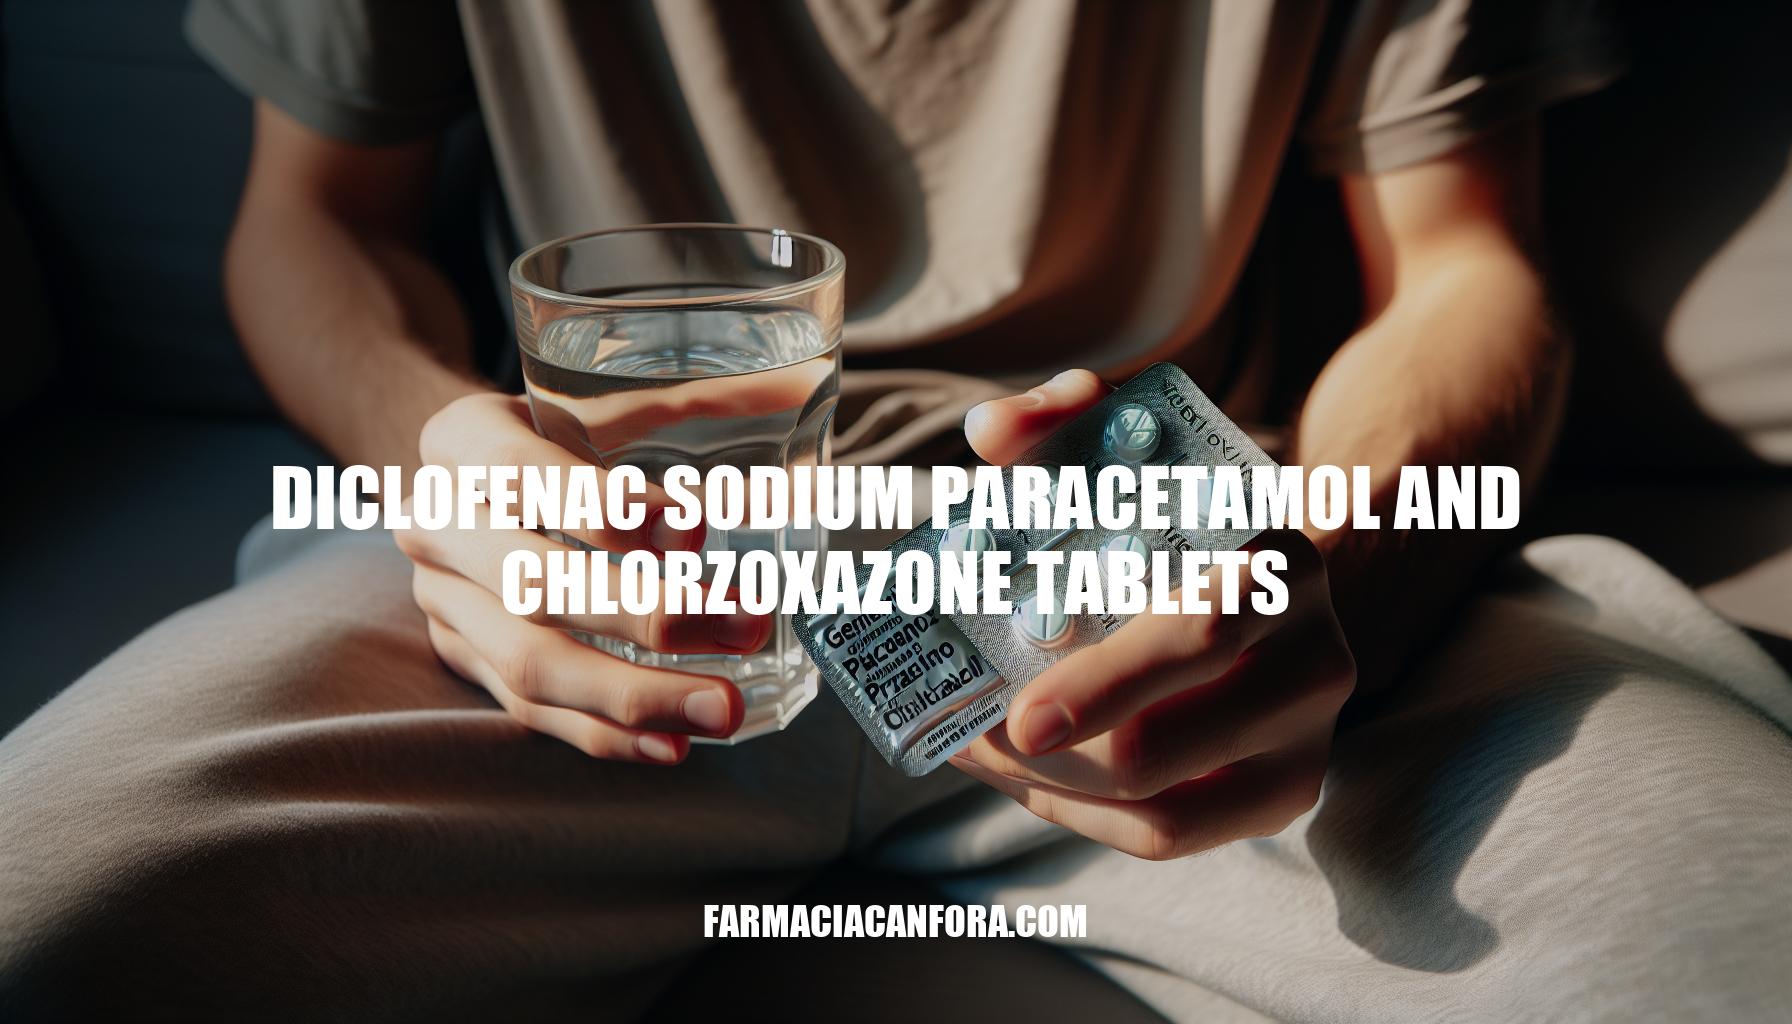 Guide to Using Diclofenac Sodium Paracetamol and Chlorzoxazone Tablets